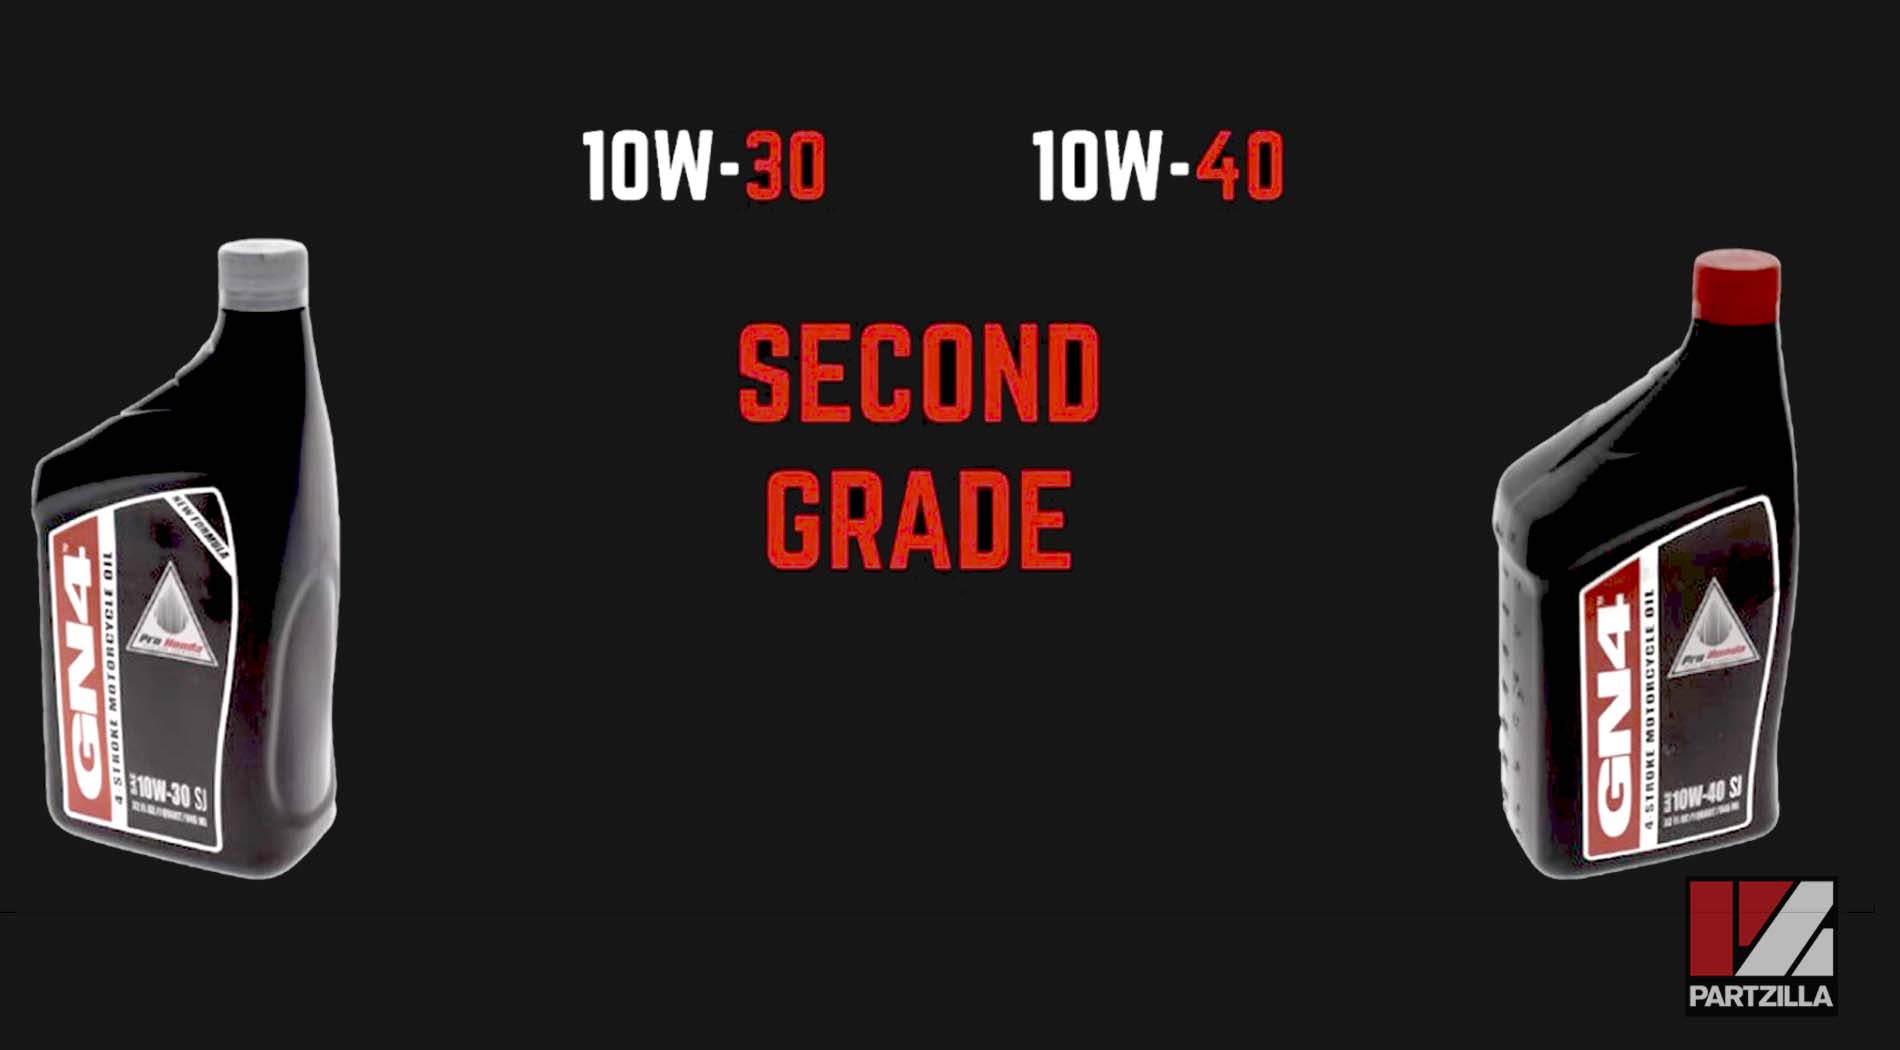 10W-30 vs 10W-40 motorcycle oil second grade